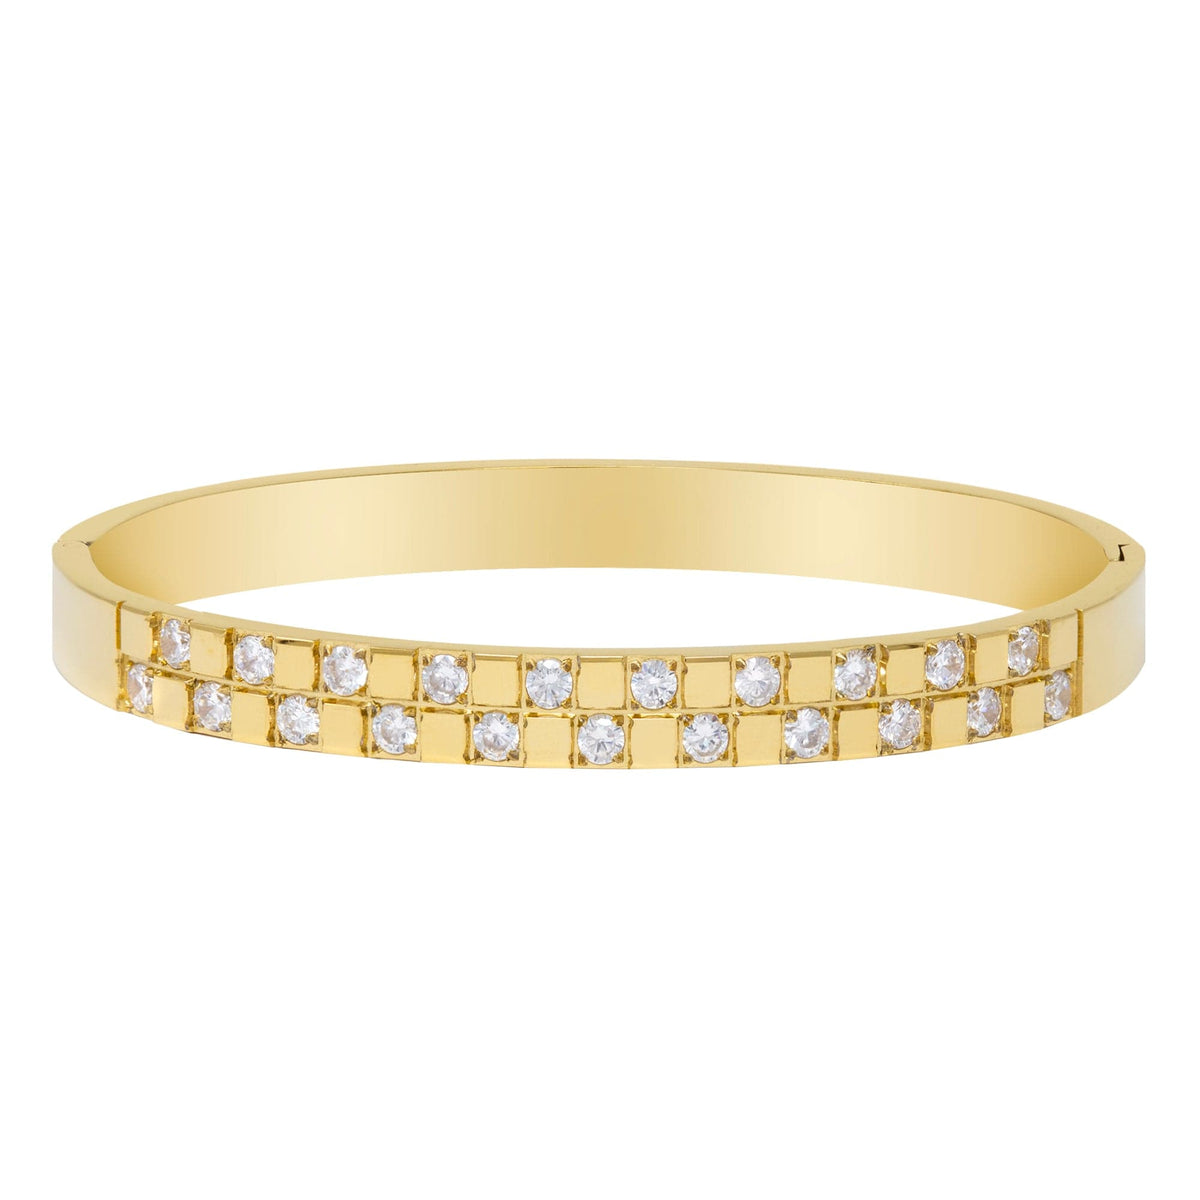 BohoMoon Stainless Steel Luminous Bracelet Gold